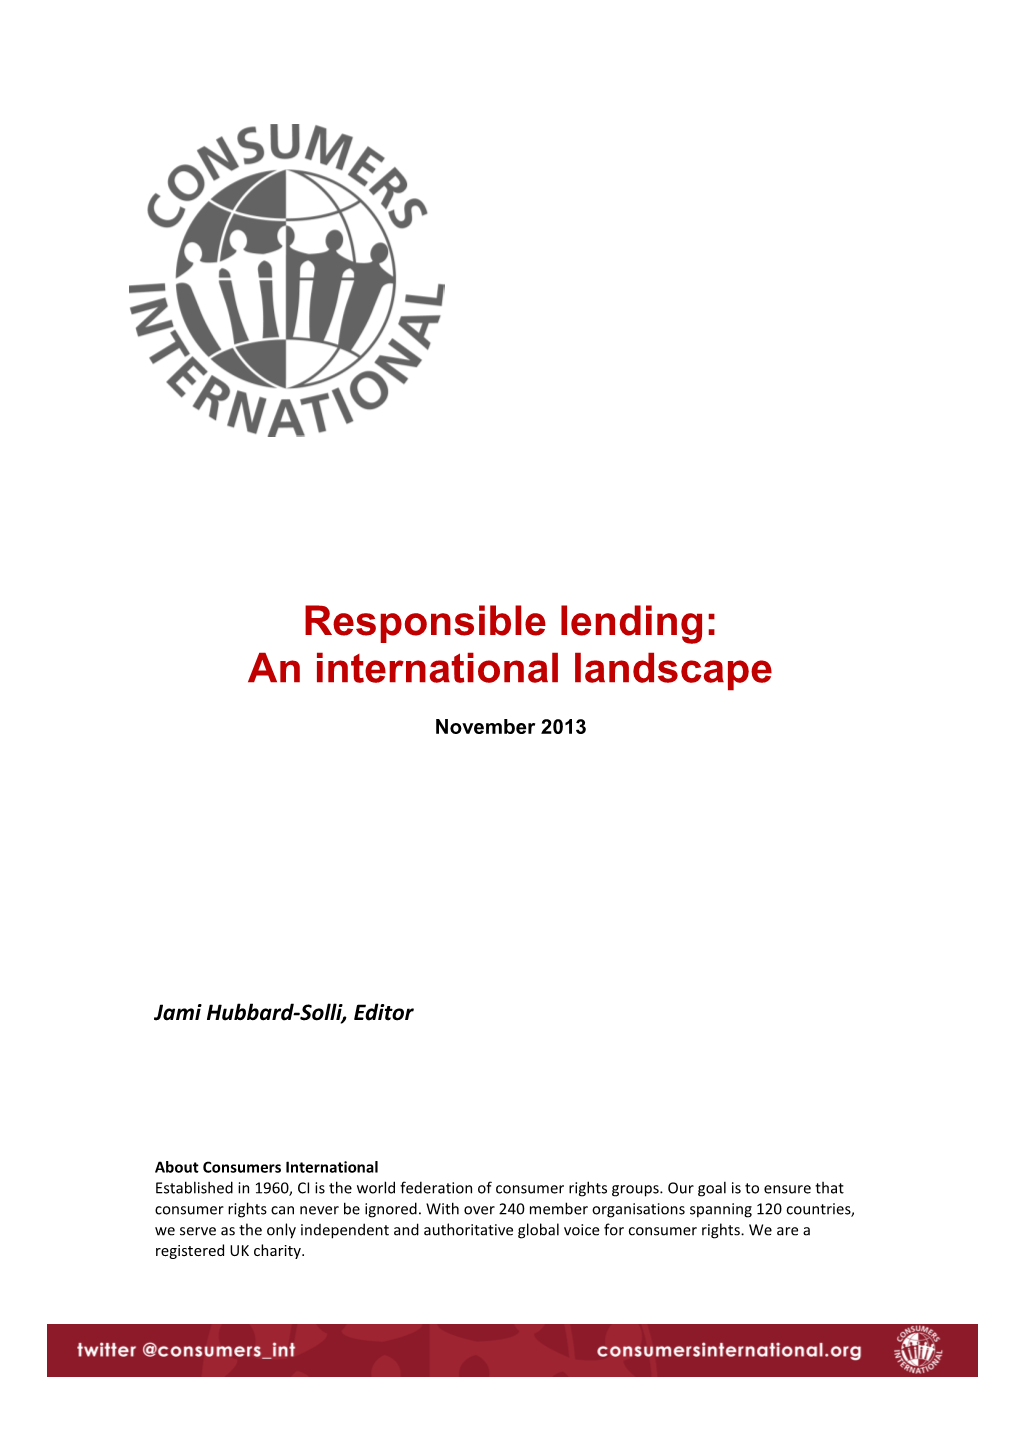 Responsible Lending: an International Landscape